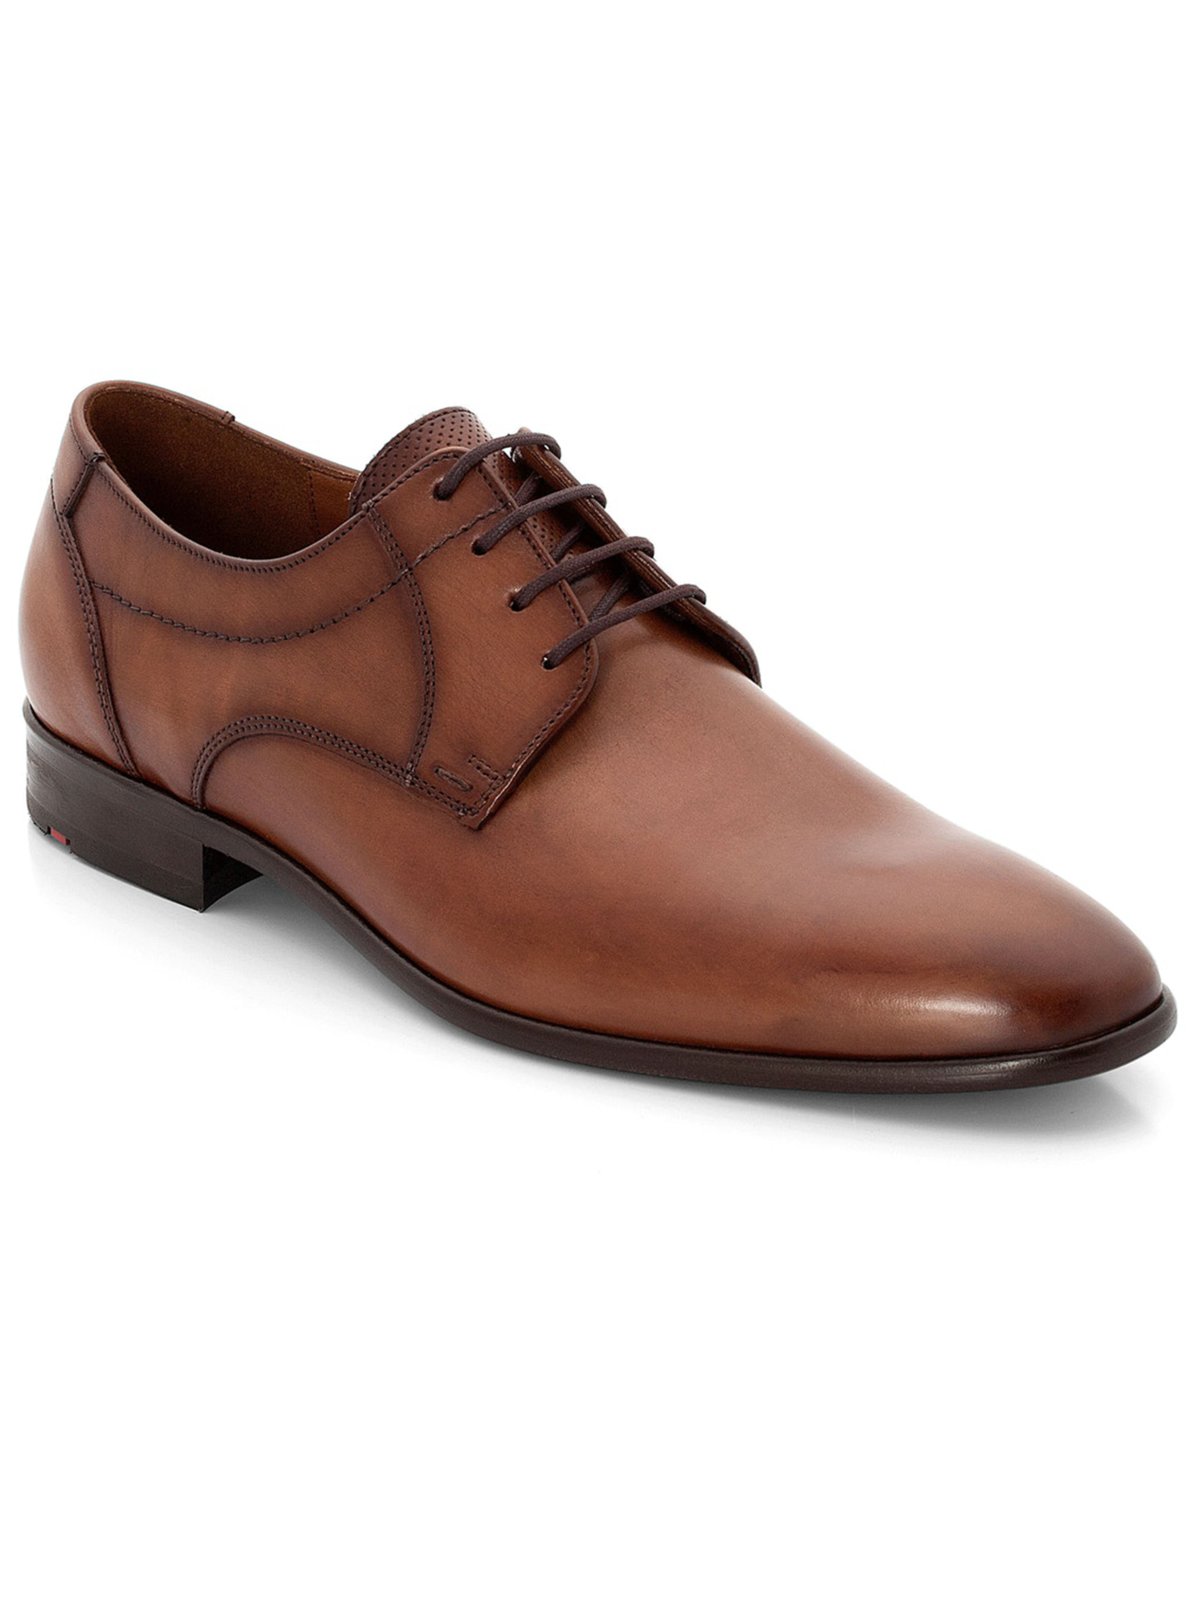 Lloyd Klassische Derby-Schuhe mit Ledersohle product